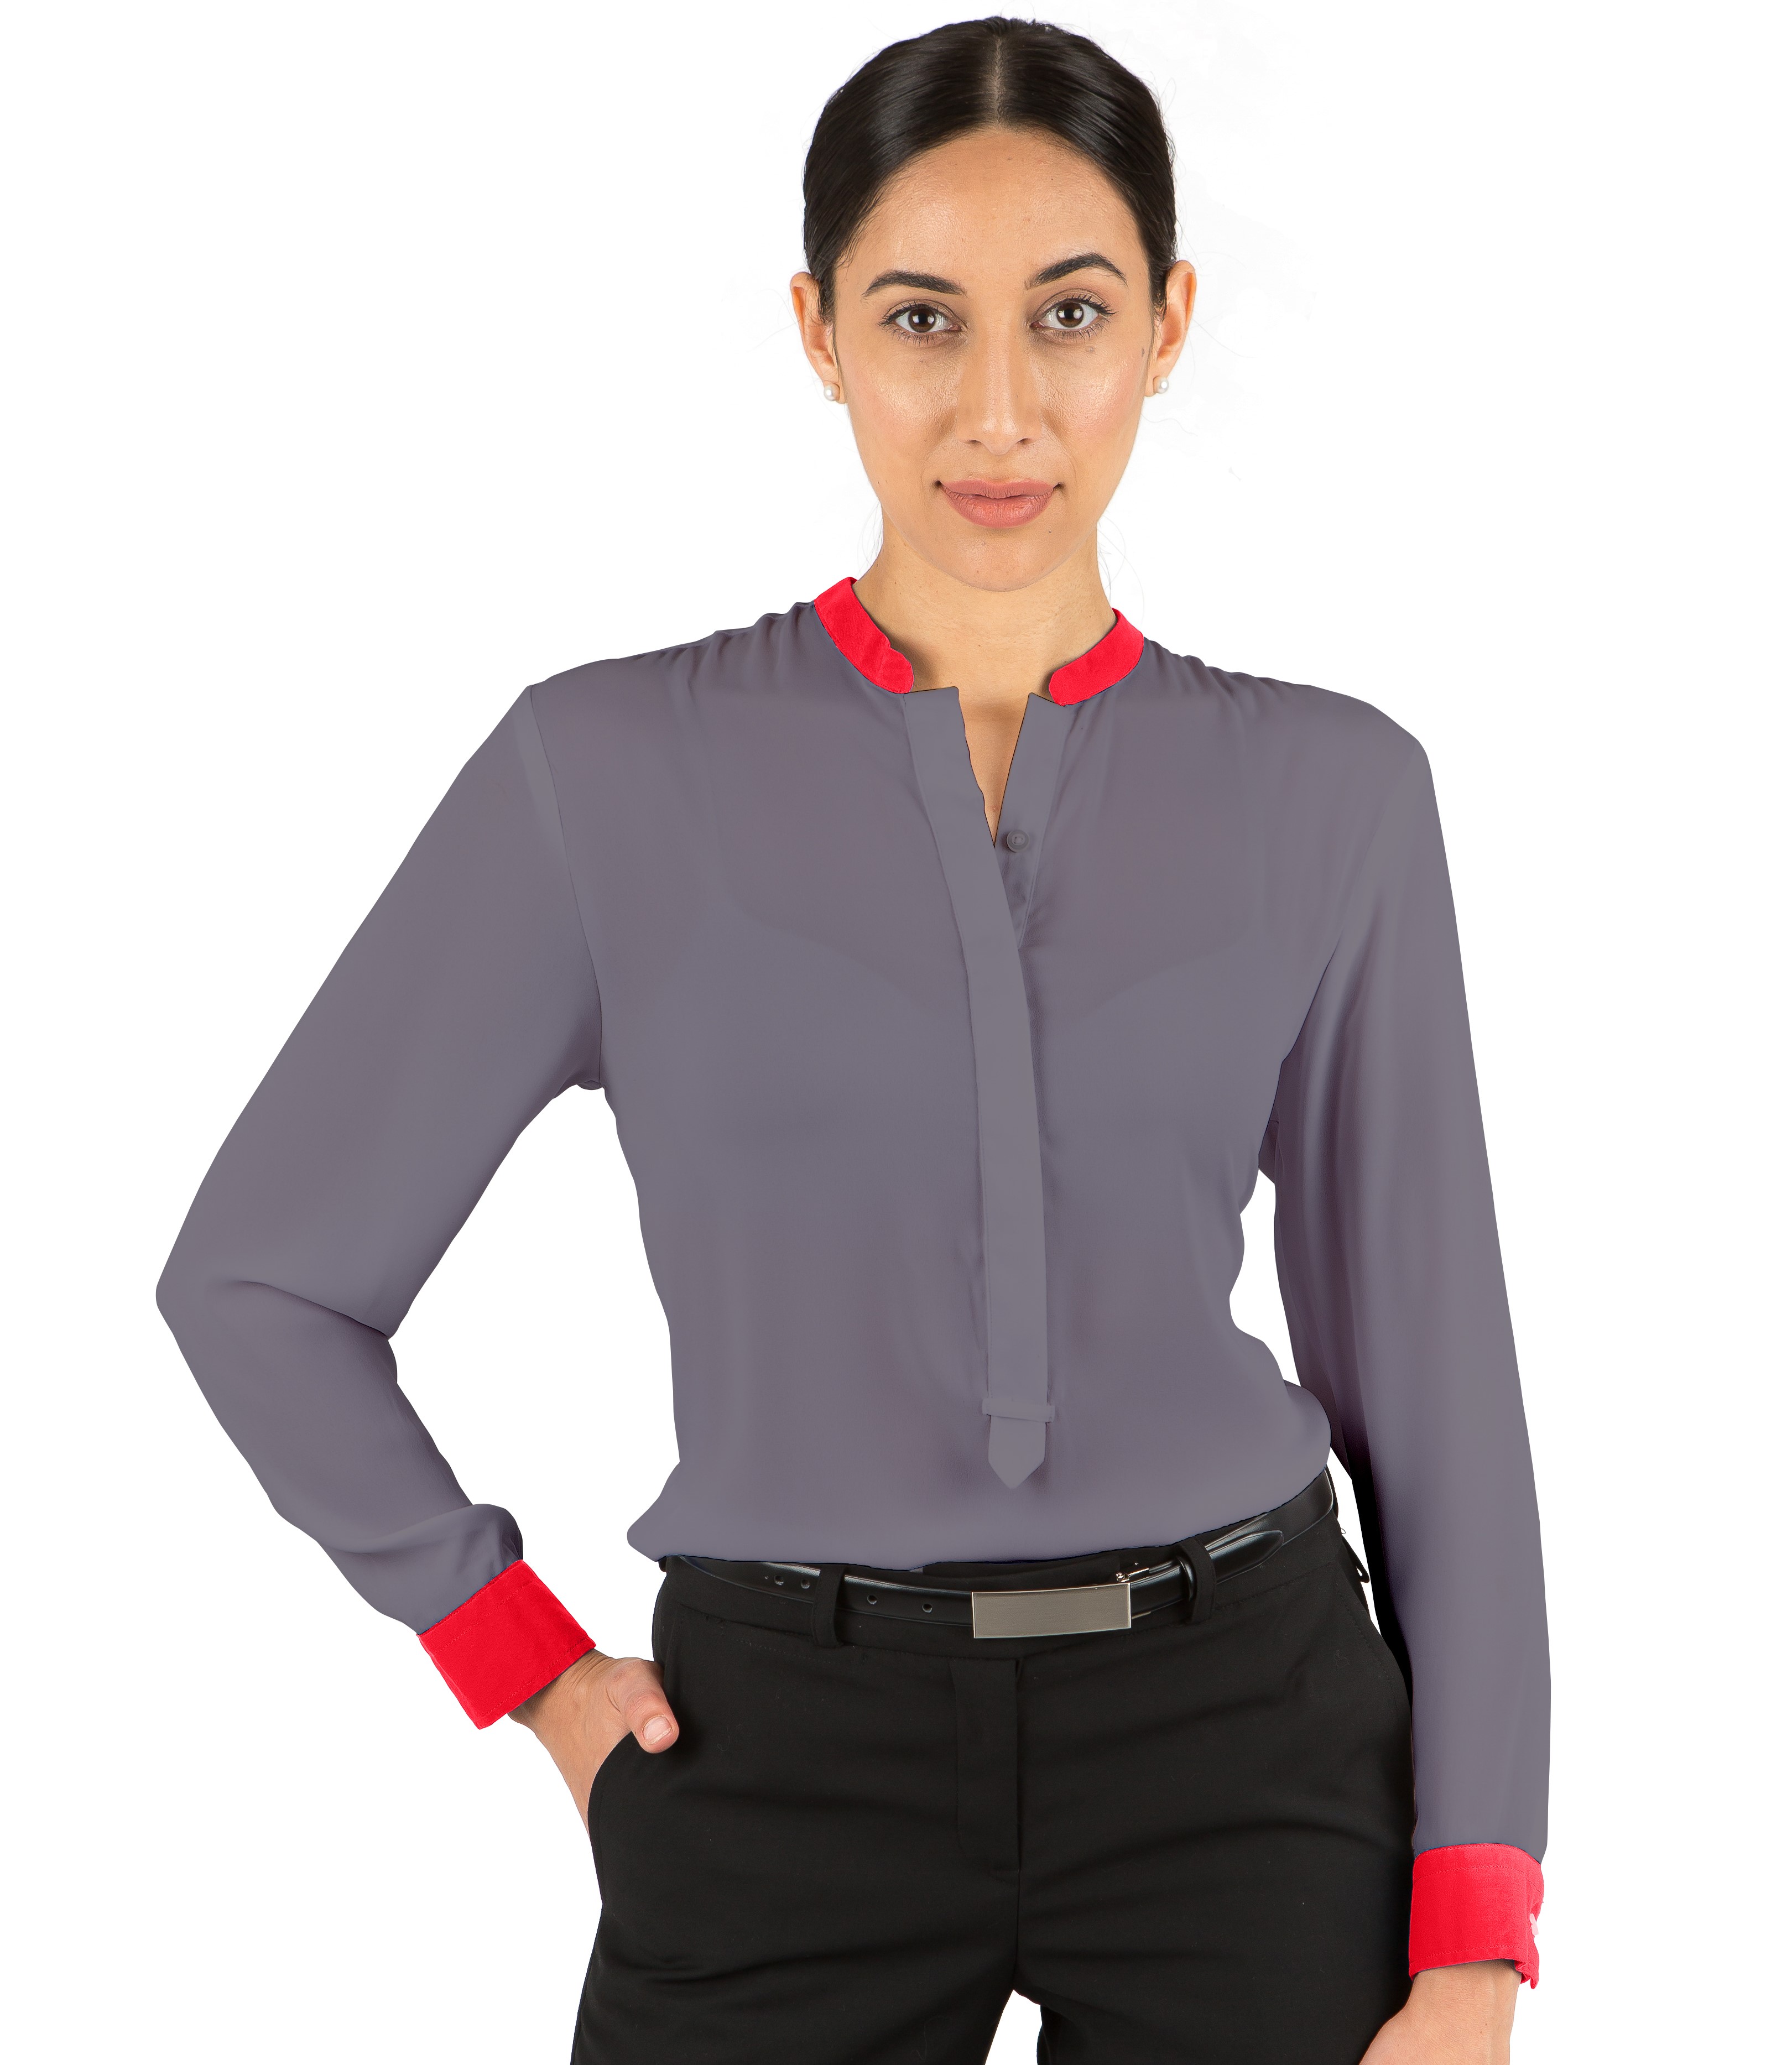 The Minimalist Guide to Corporate Uniform Blouses – The Uniform Edit